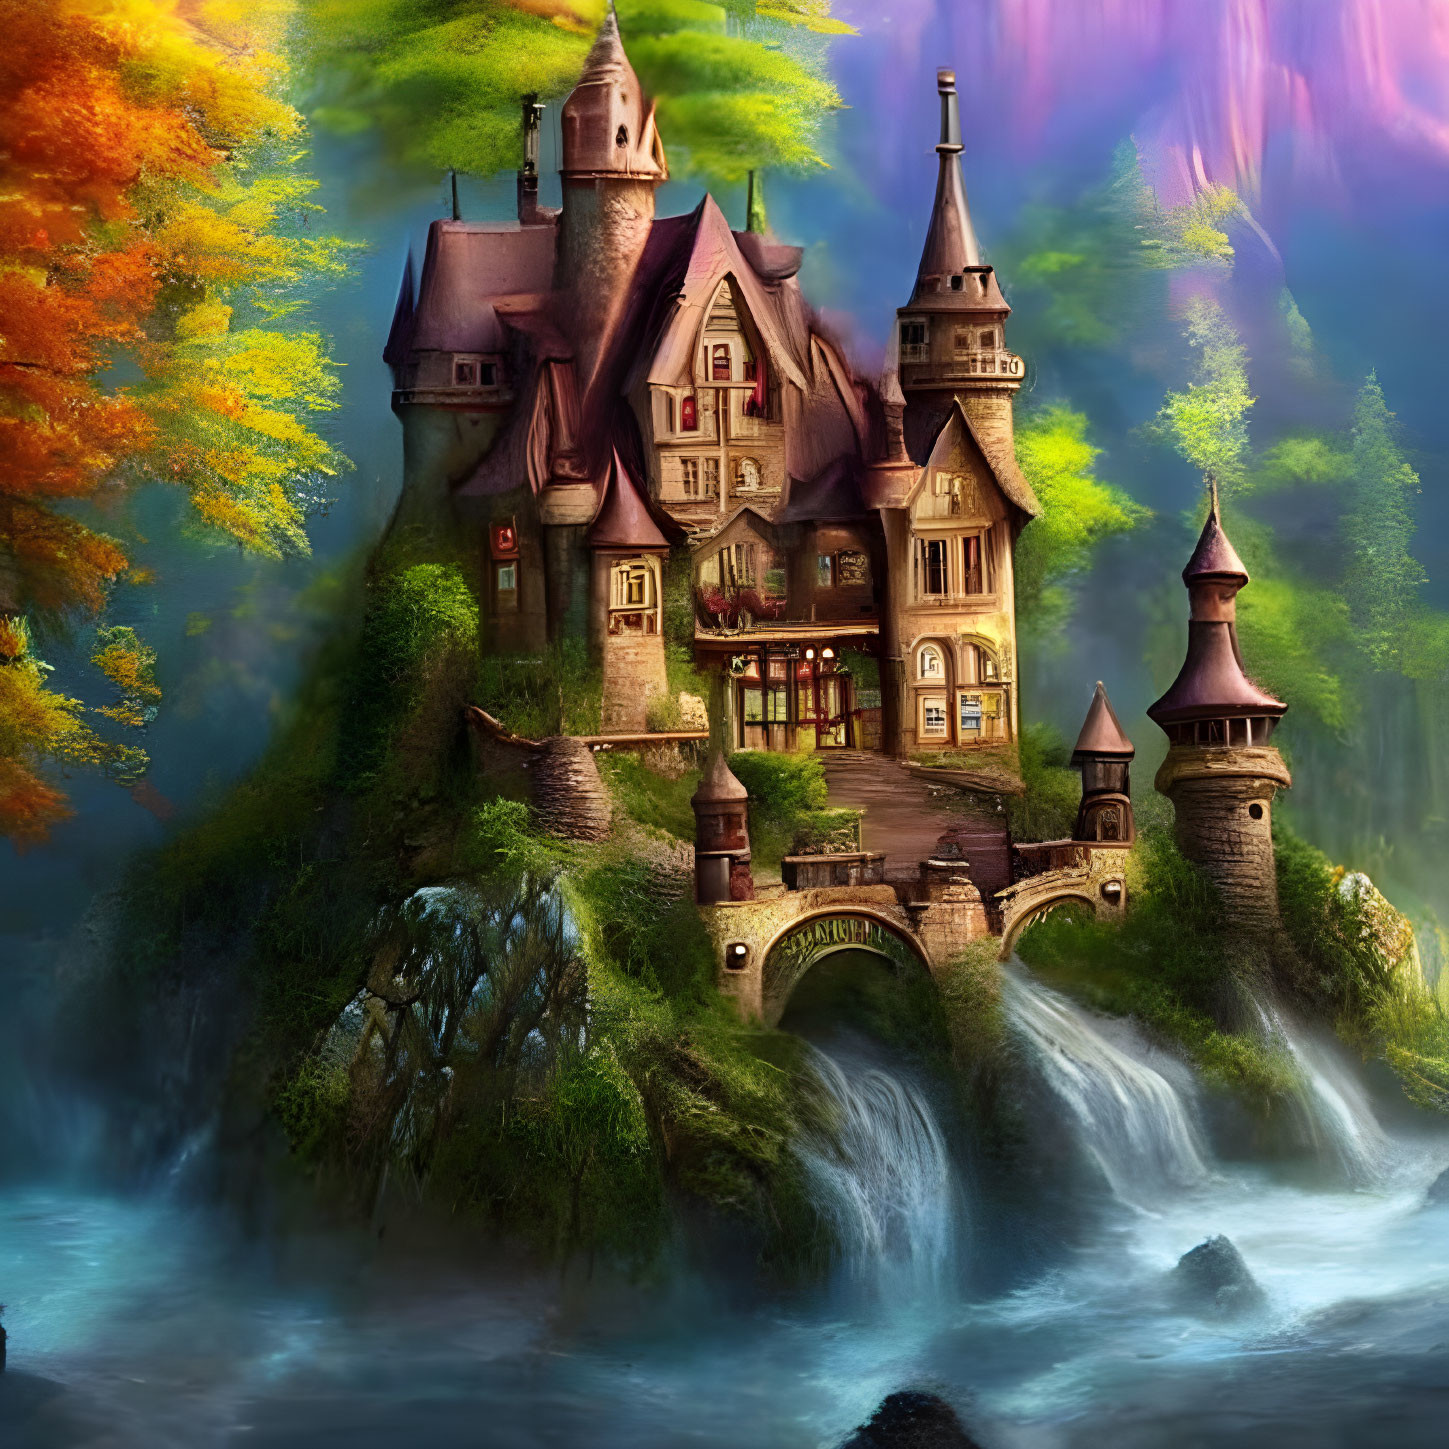 Fairytale castle on waterfall in autumn forest under twilight sky